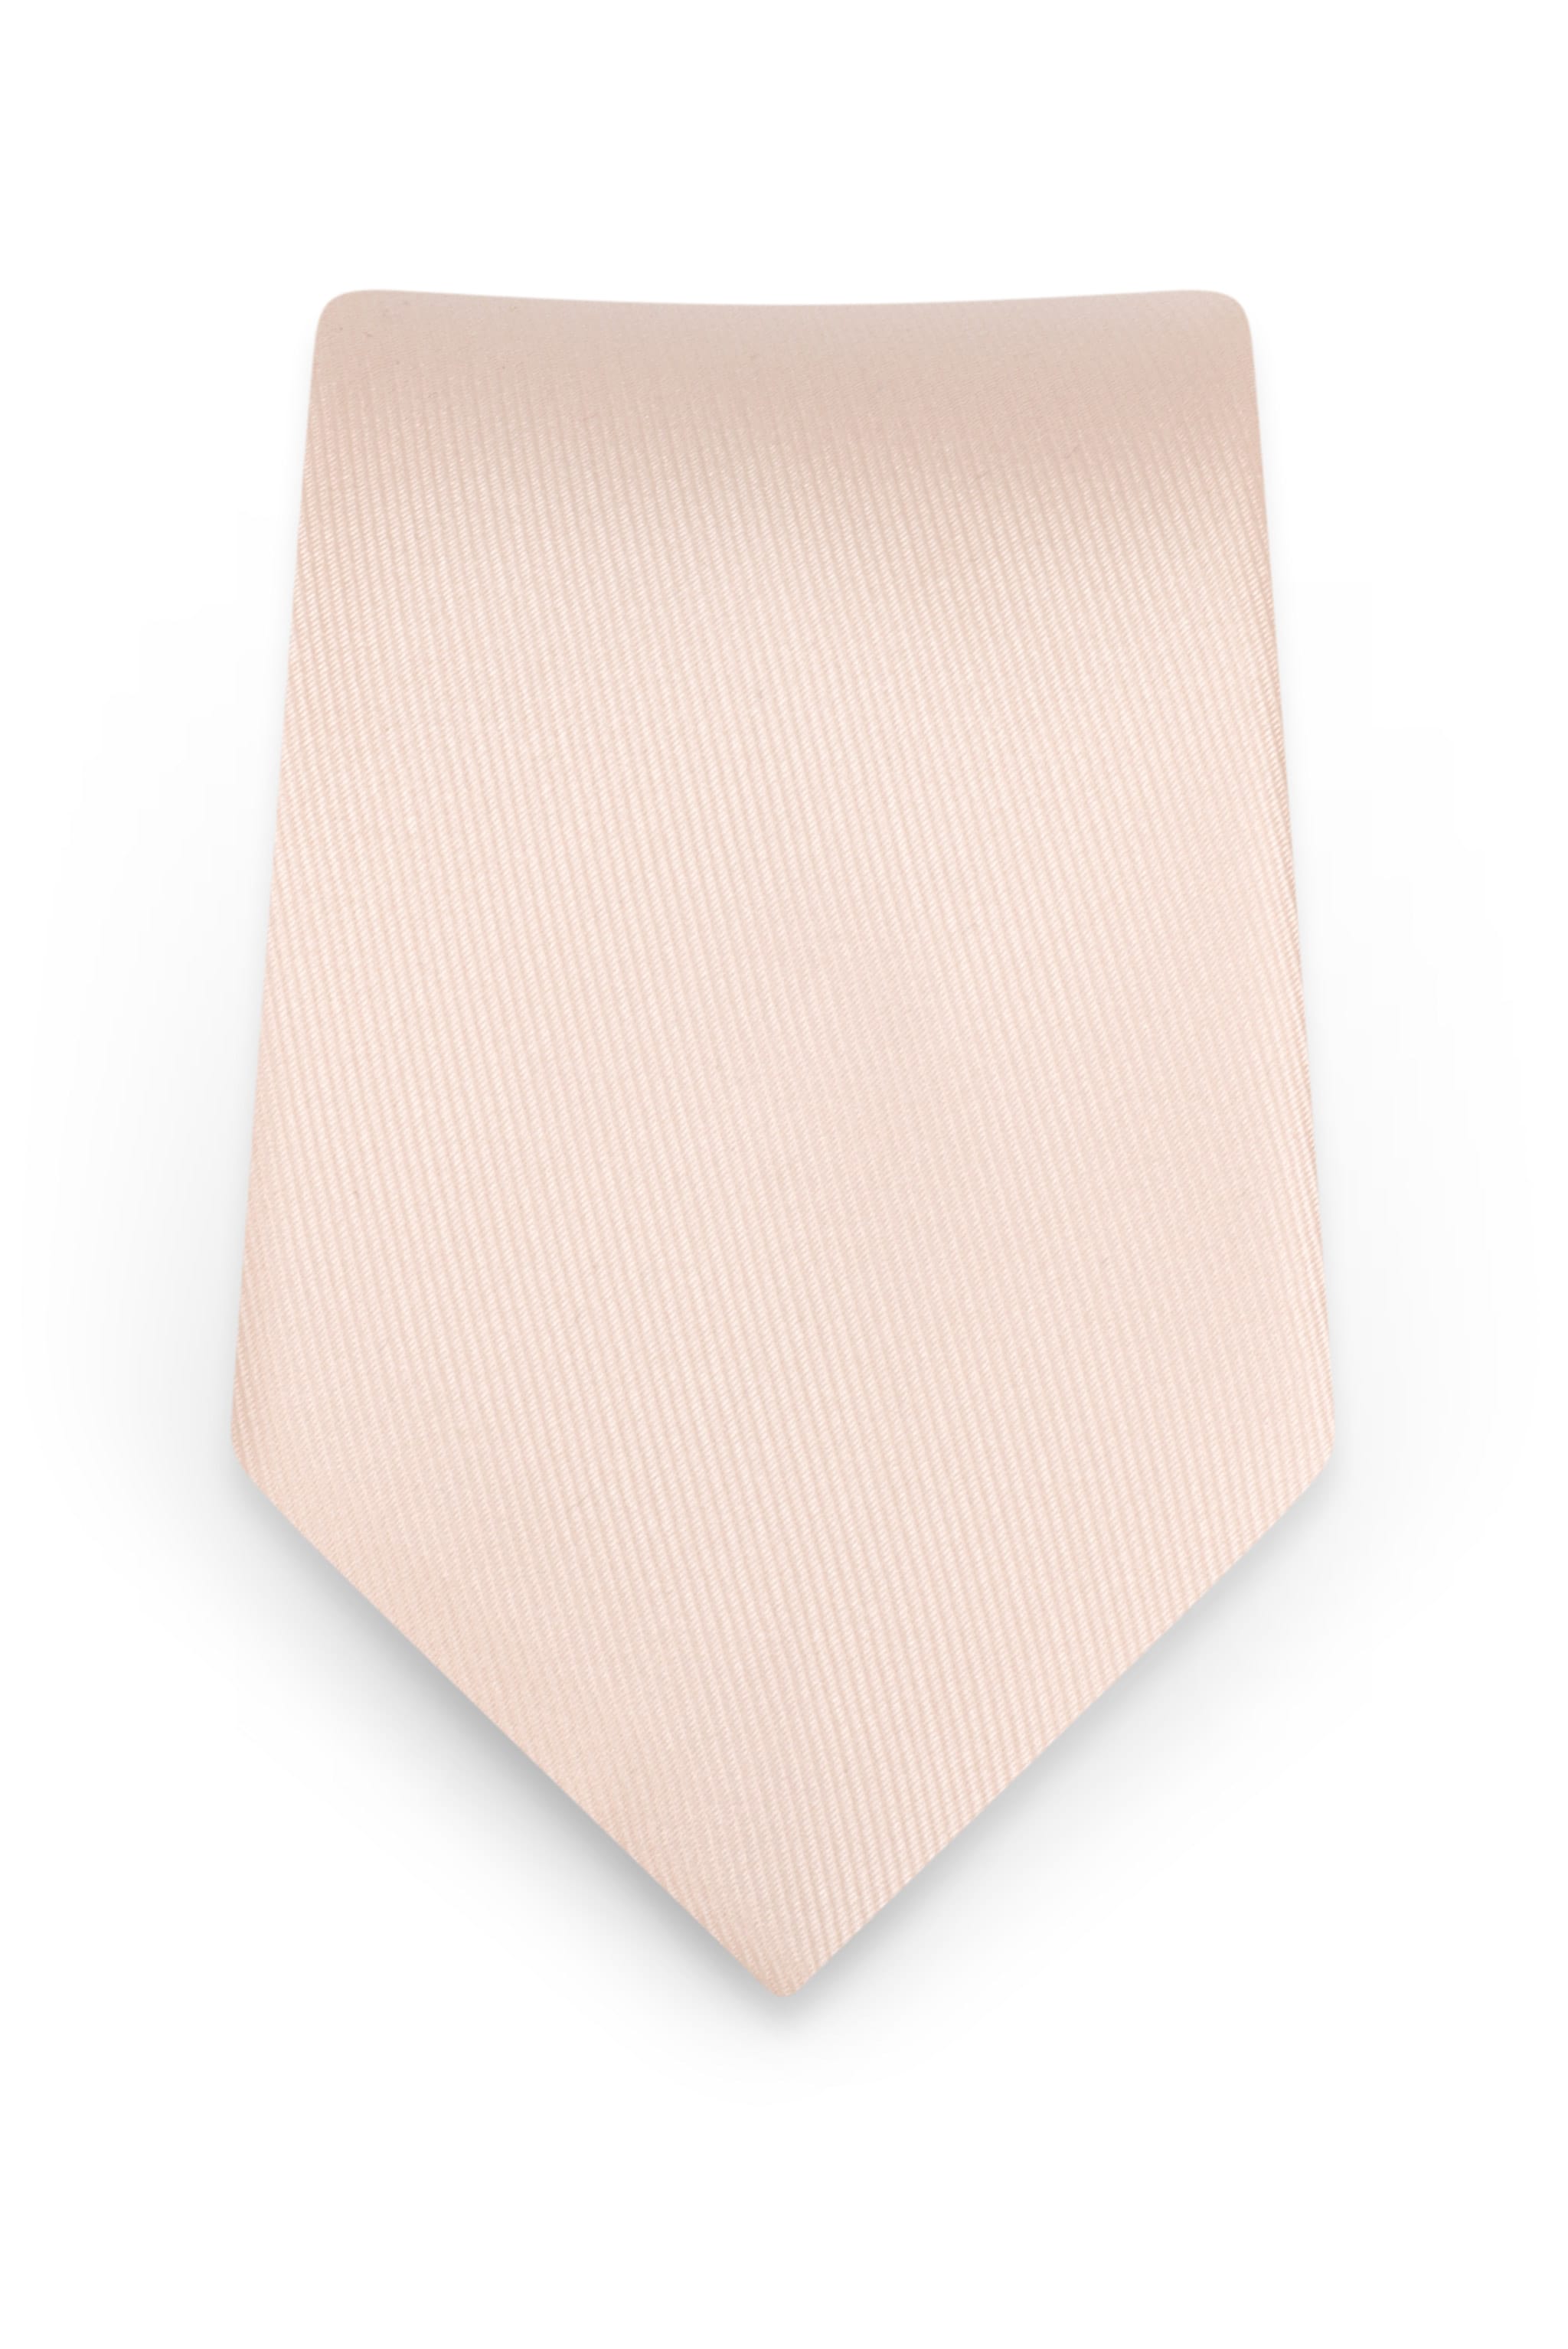 Solid Blush Self-Tie Windsor Tie